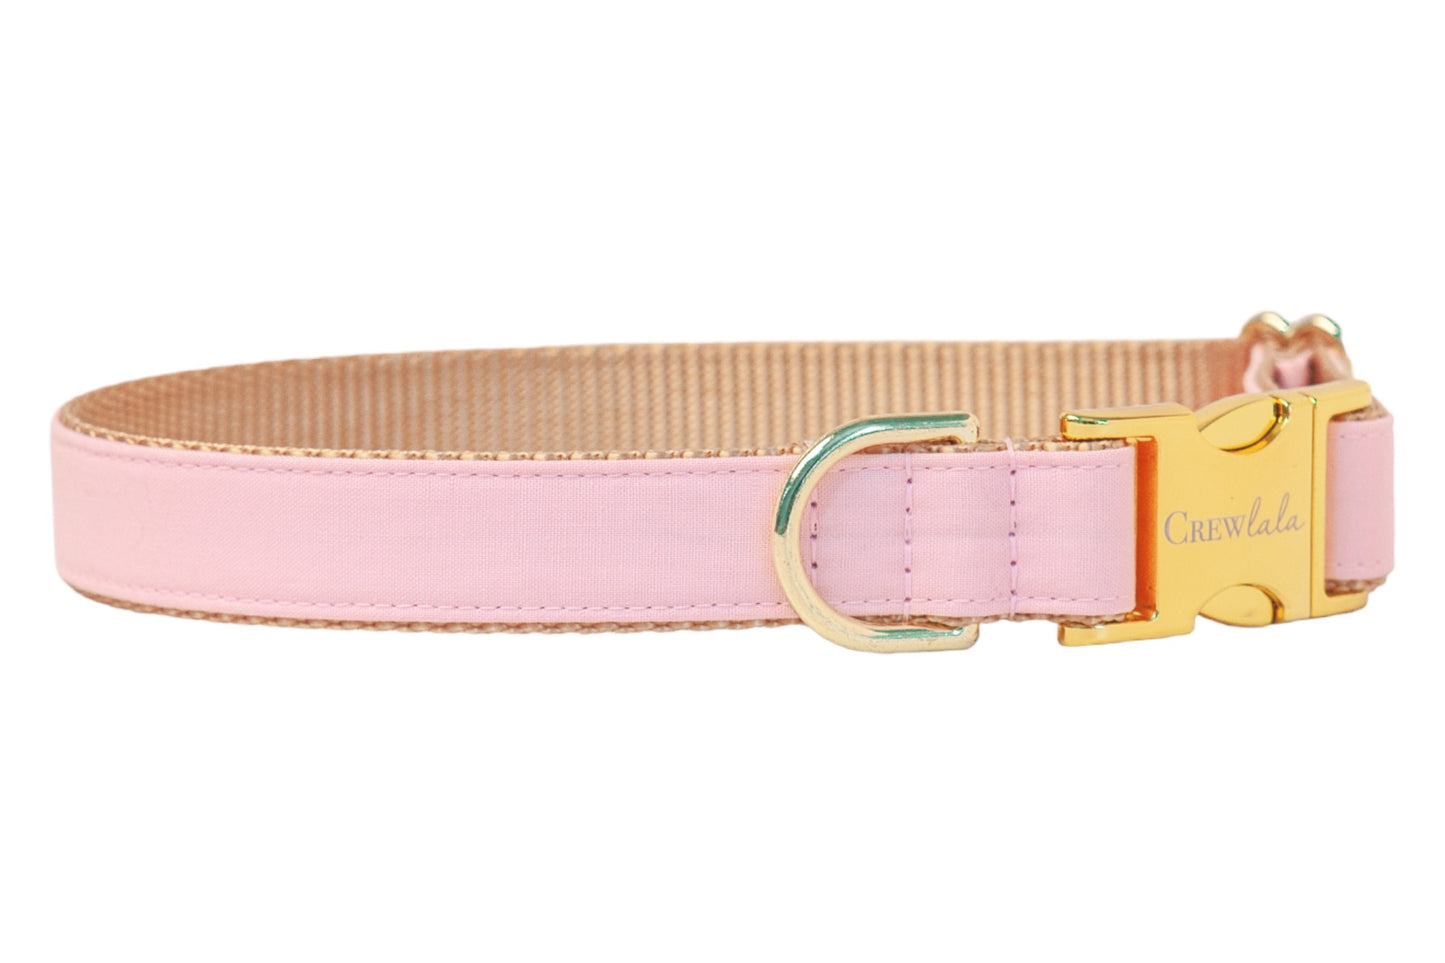 Blush Pink Bow Tie Dog Collar